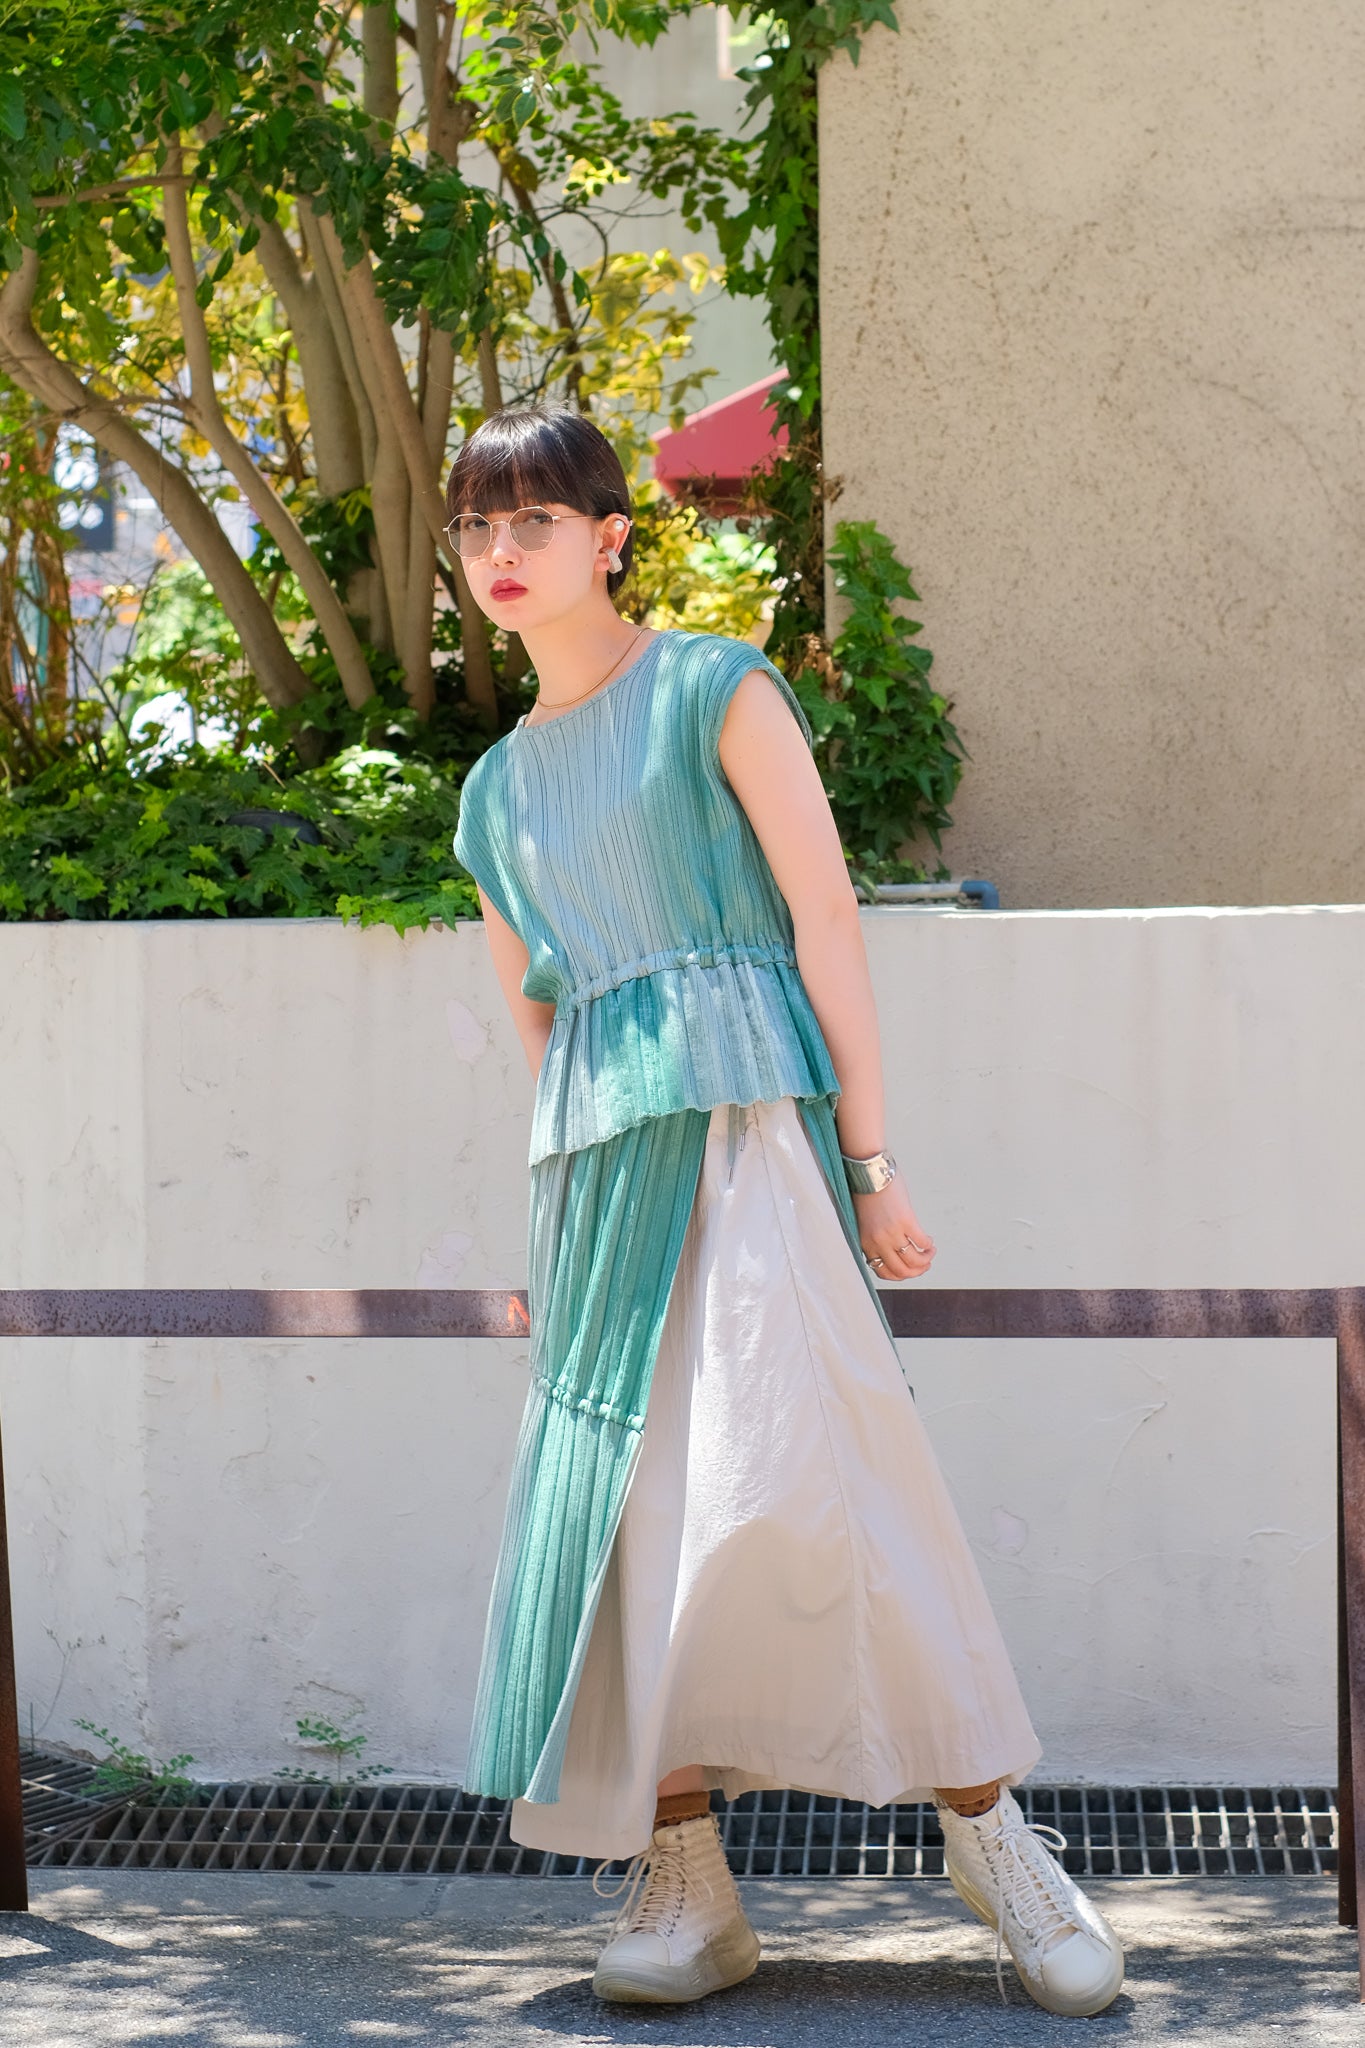 tiit tokyo의 gradation knit top과 gradation knit skirt를 사용한 스타일링 이미지